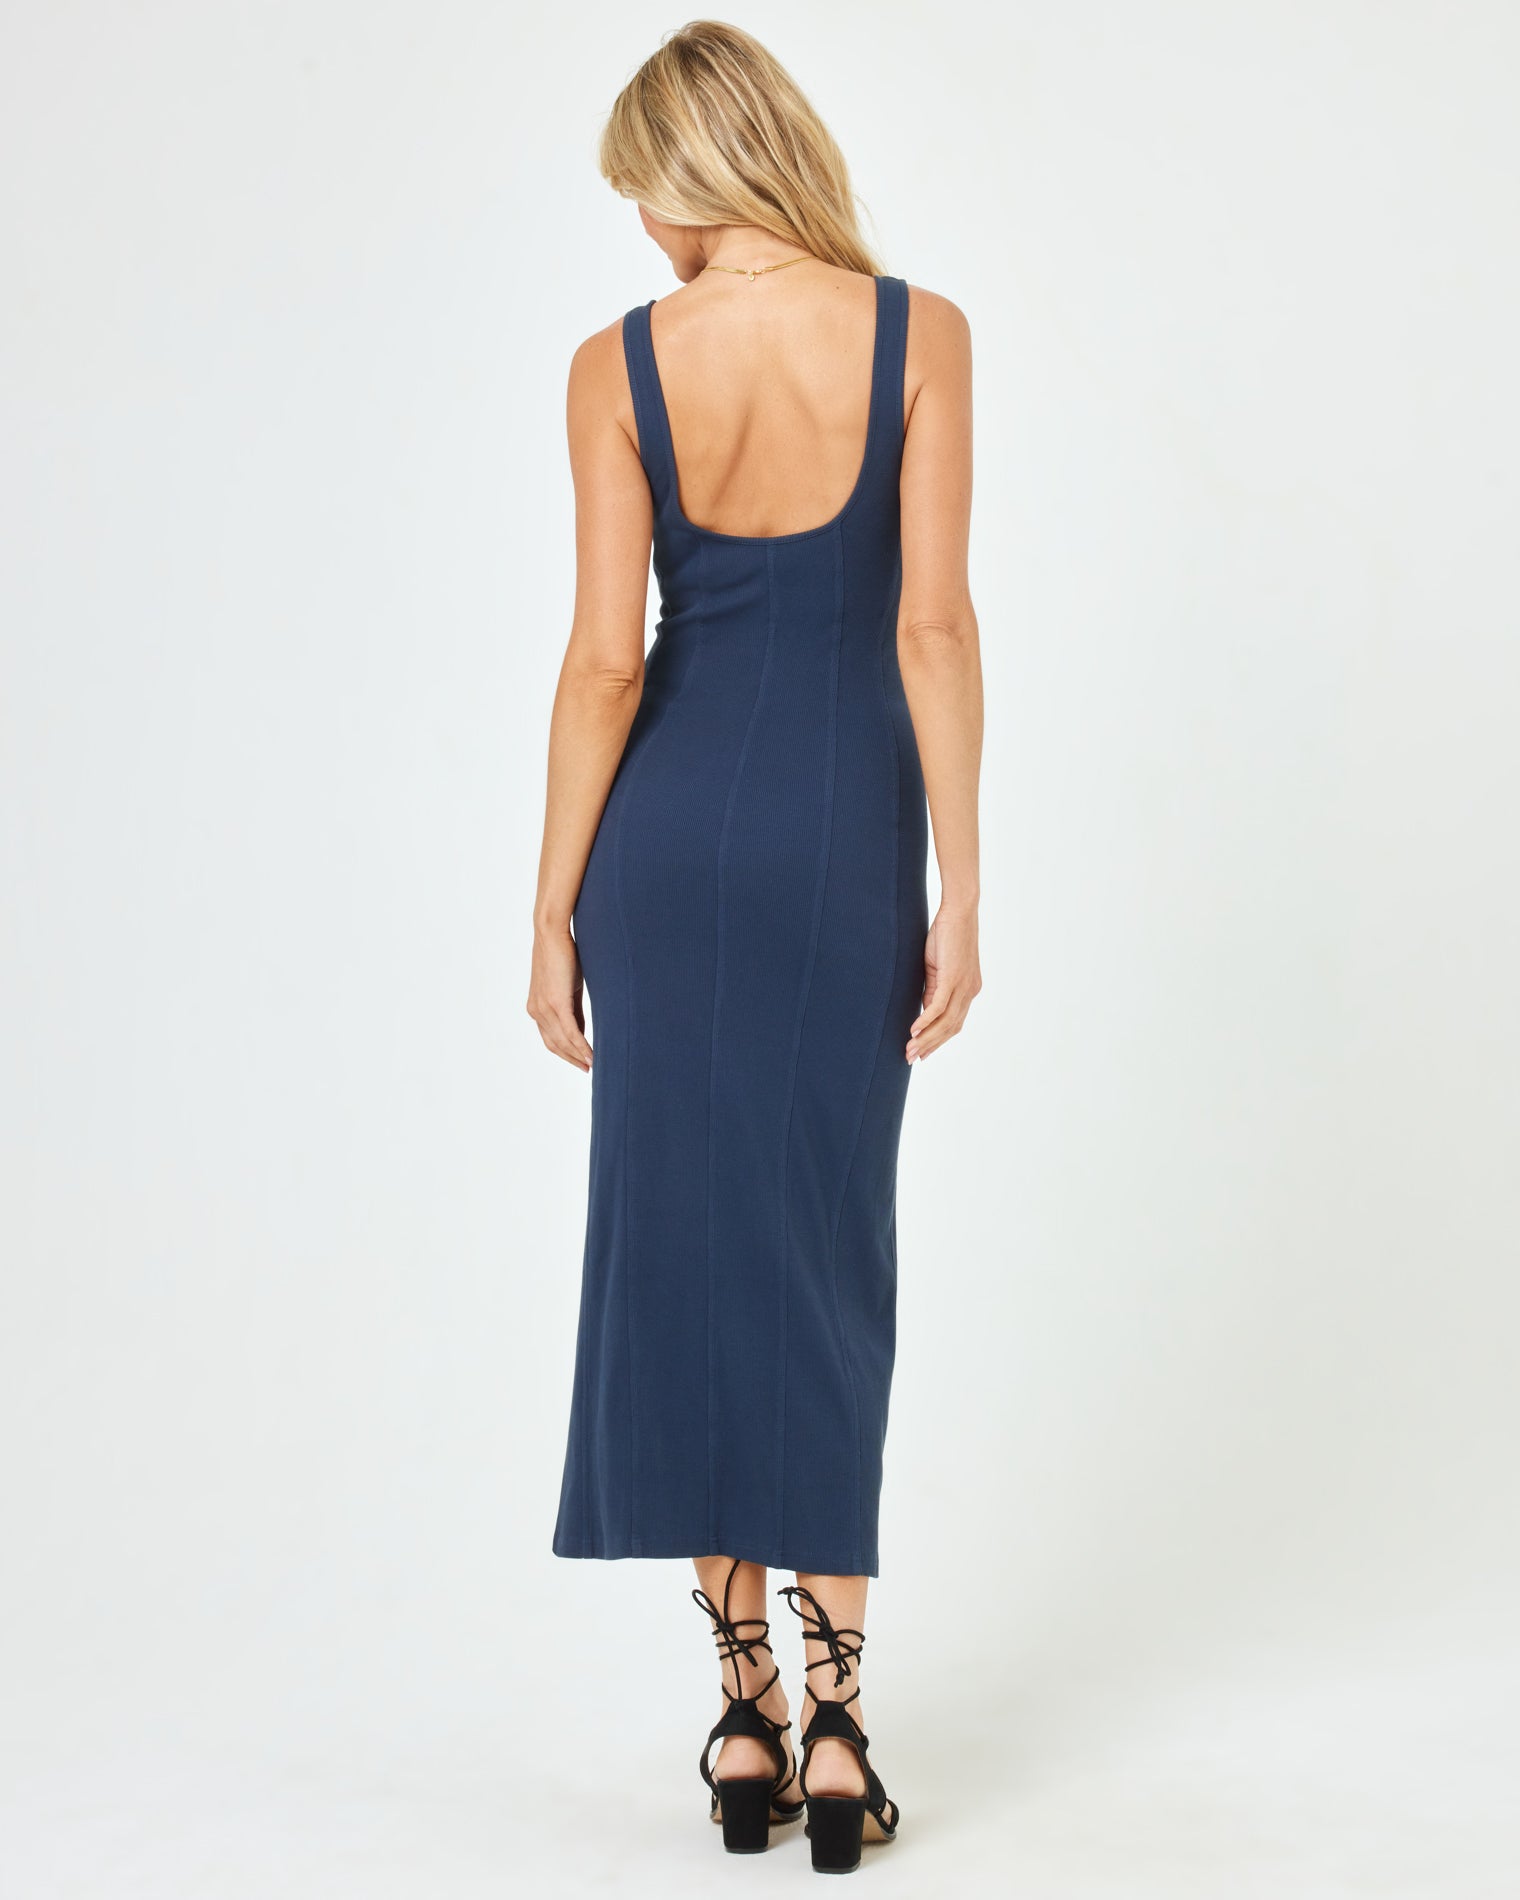 Vivienne Dress - Slate Slate | Model: Lura (size: S)